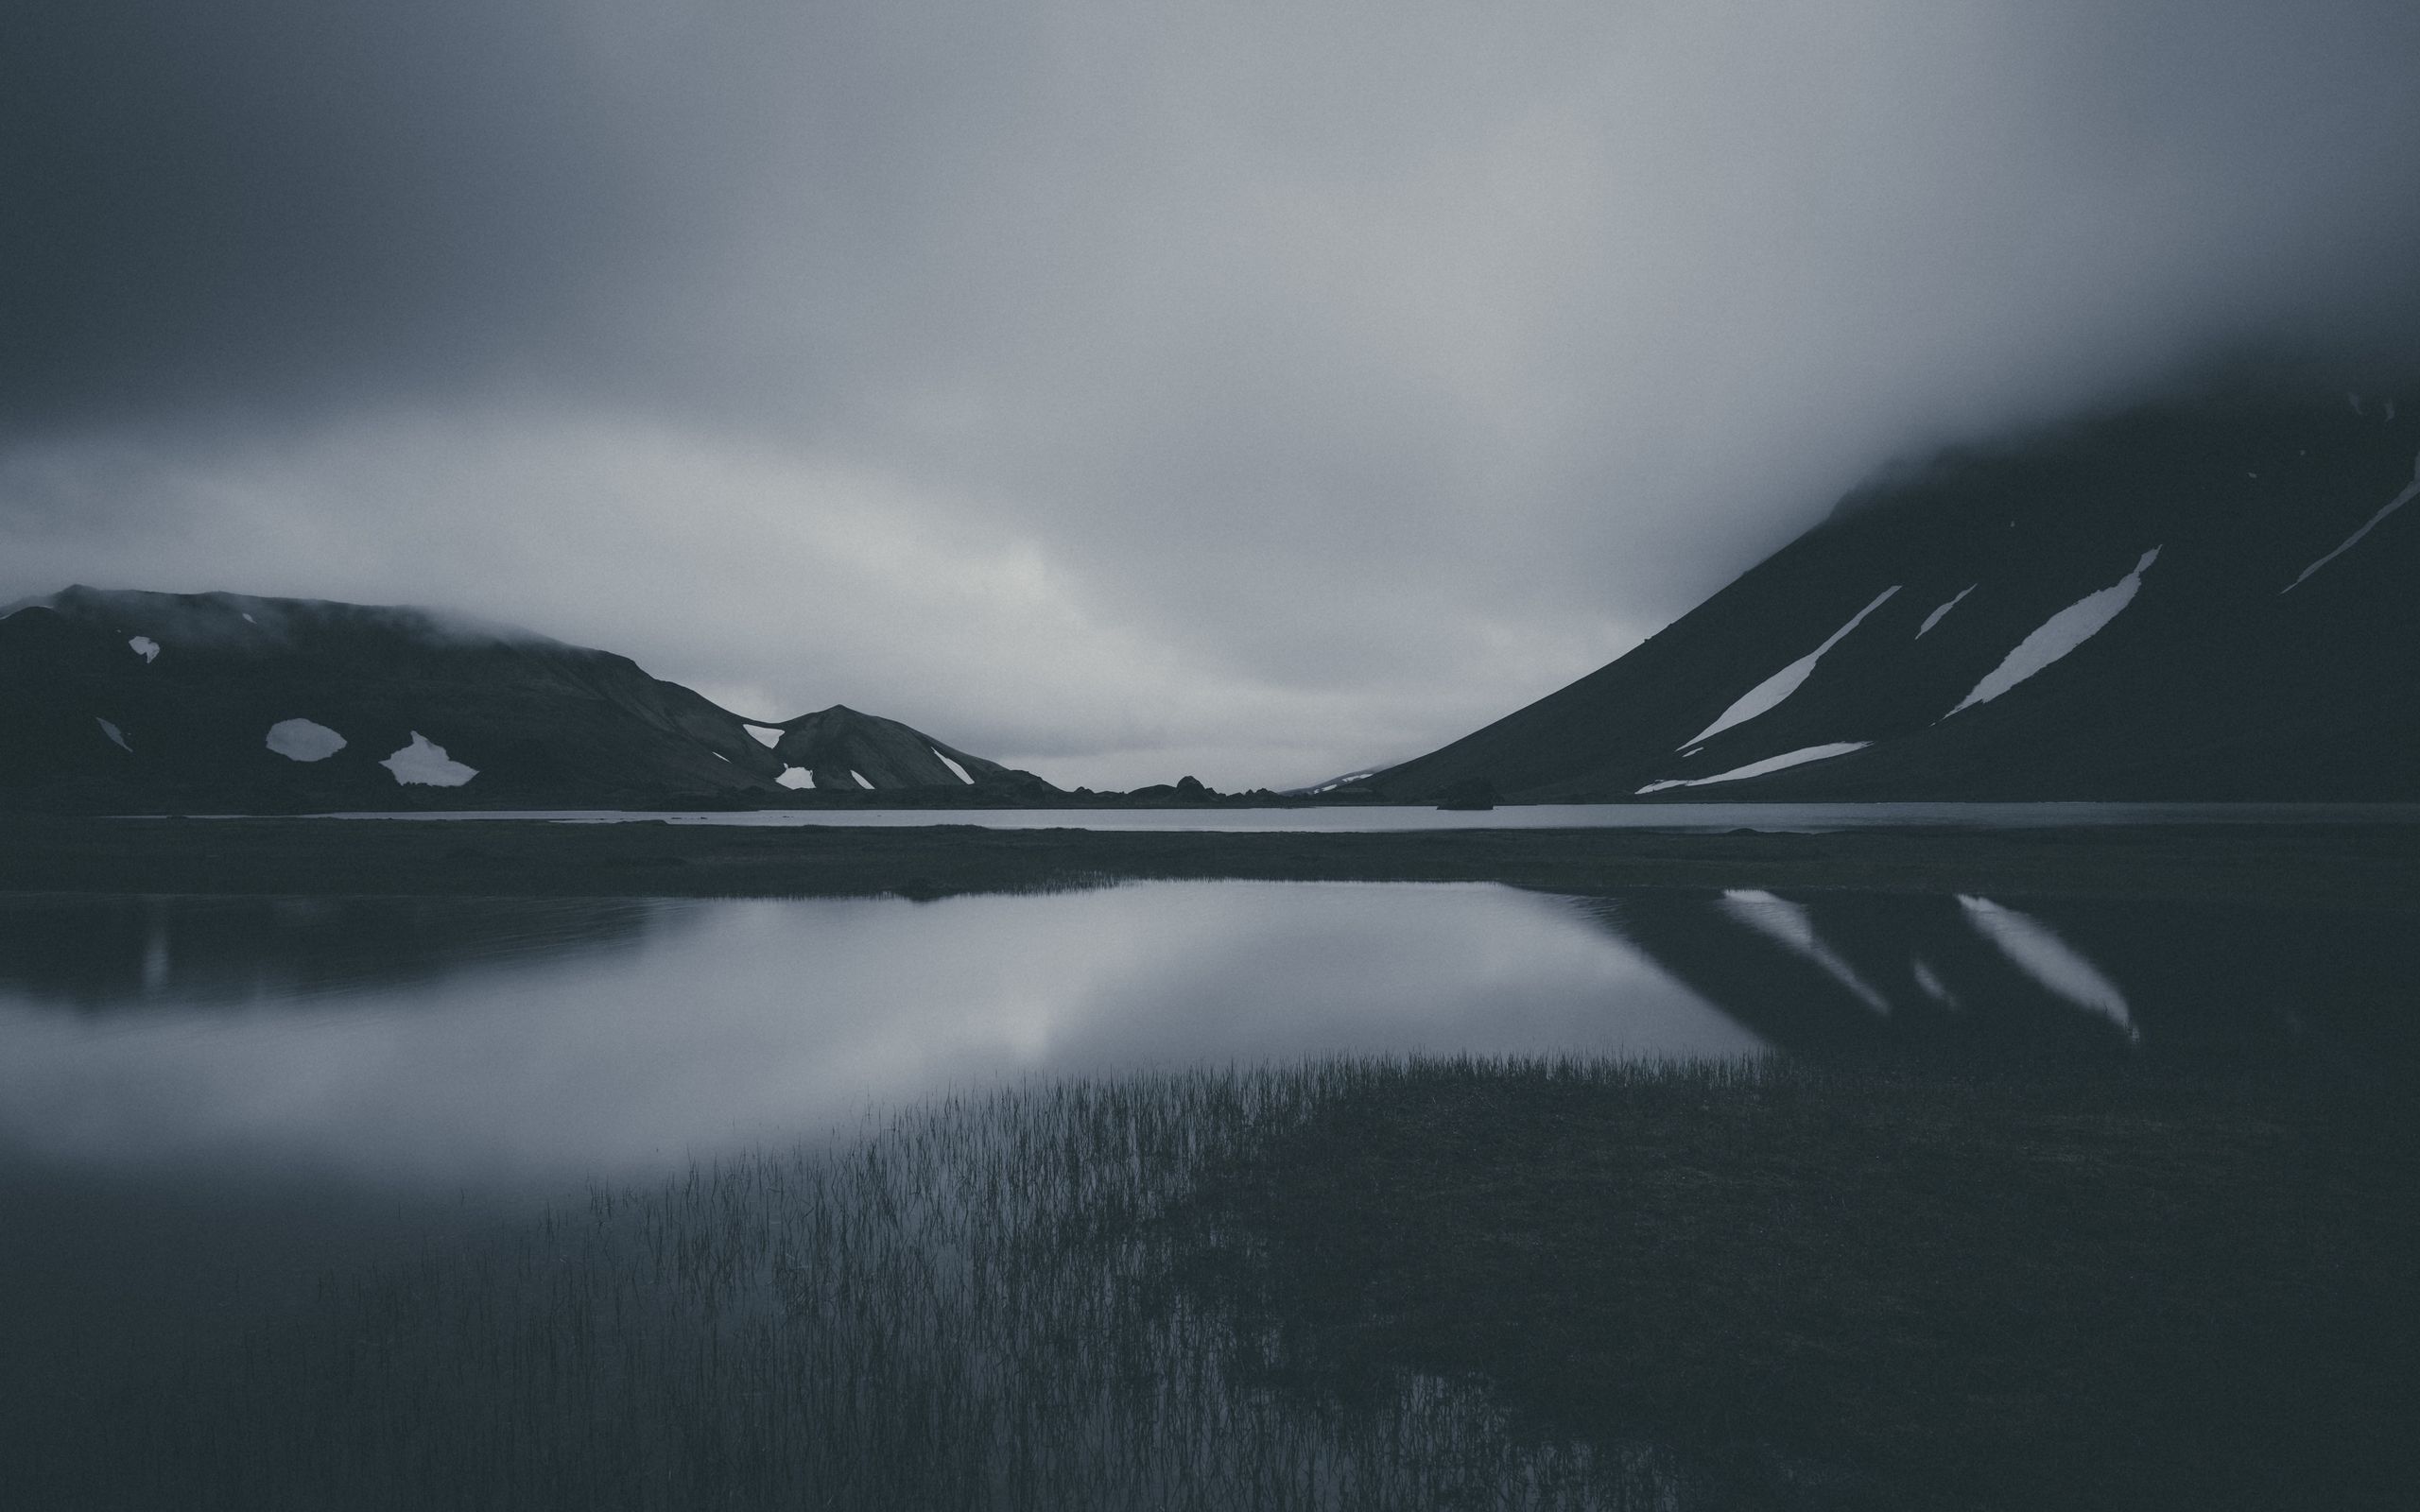 Download wallpaper 2560x1600 mountain, lake, dark, bw widescreen